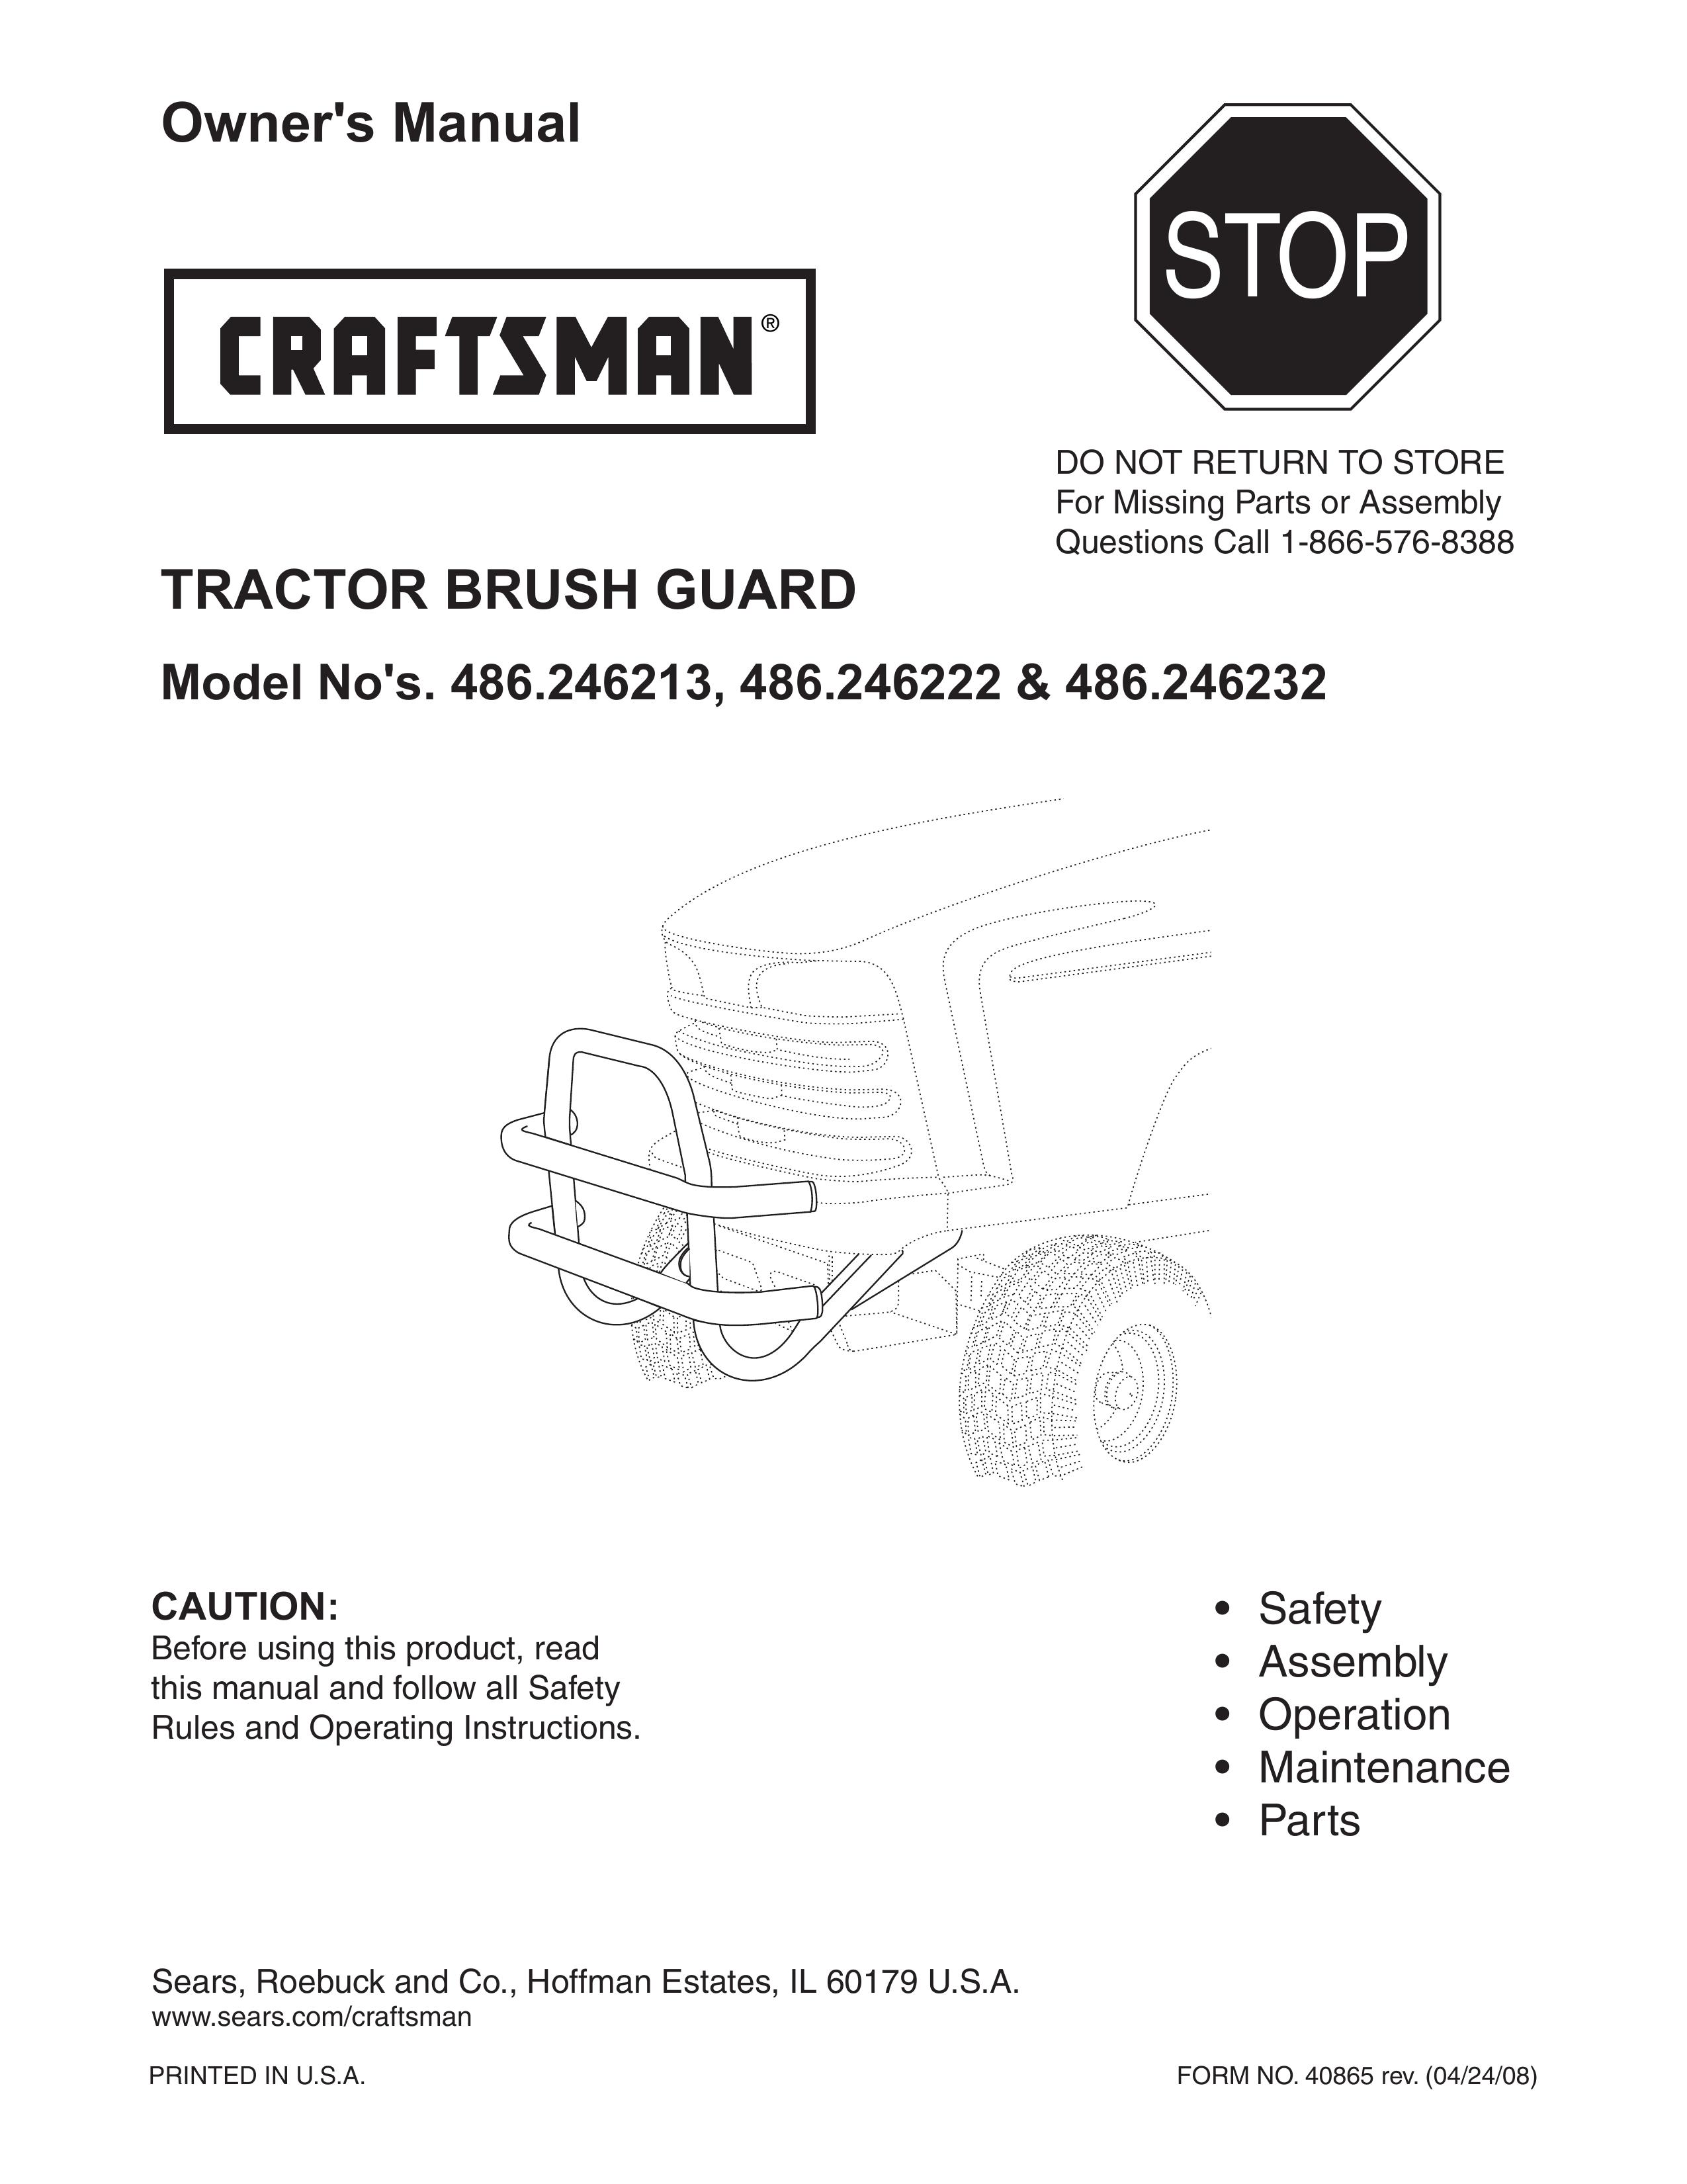 Craftsman 486.246222 Lawn Mower Accessory User Manual